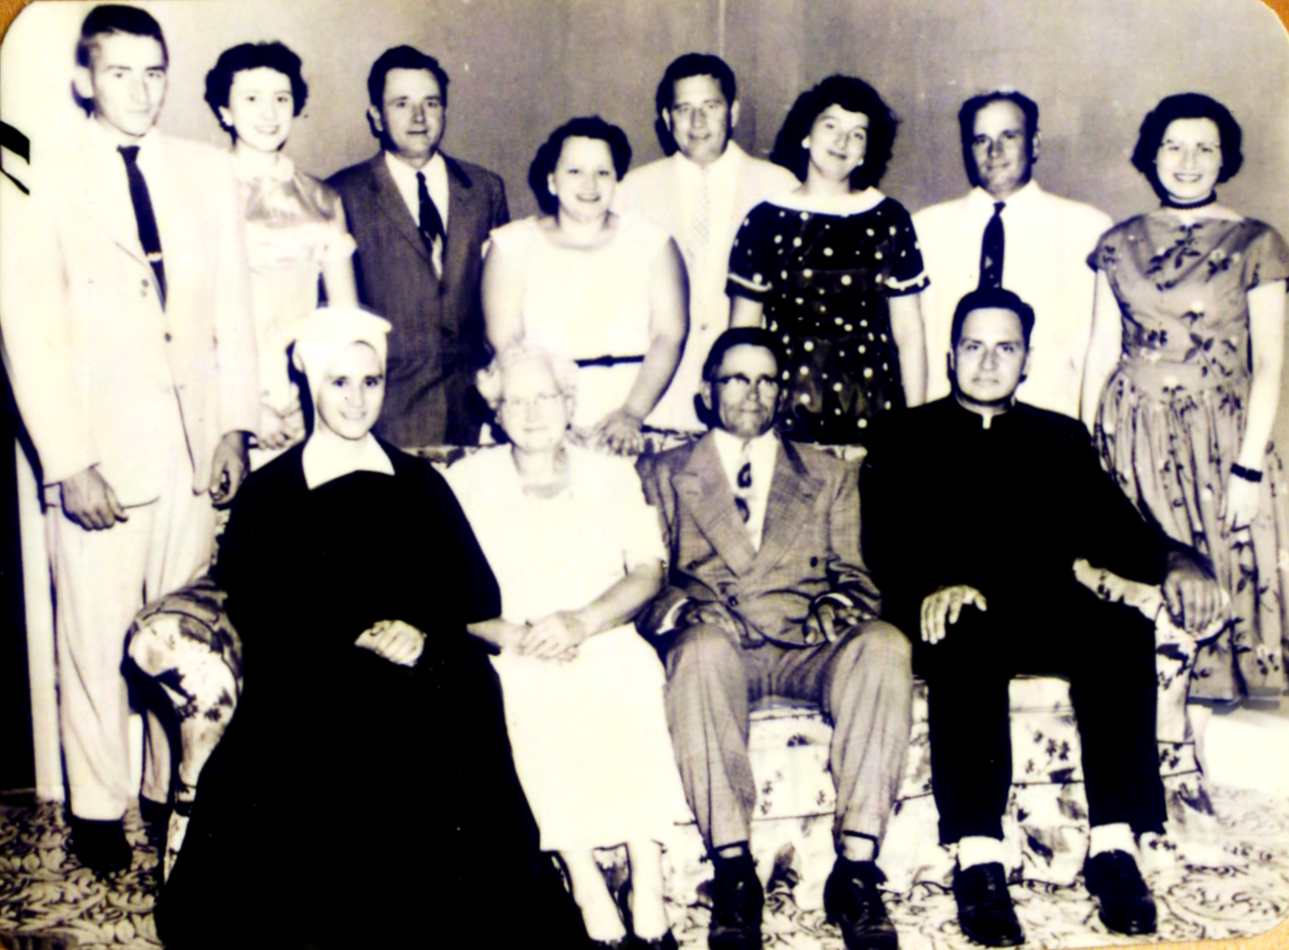 William Jacob Reisz and Family